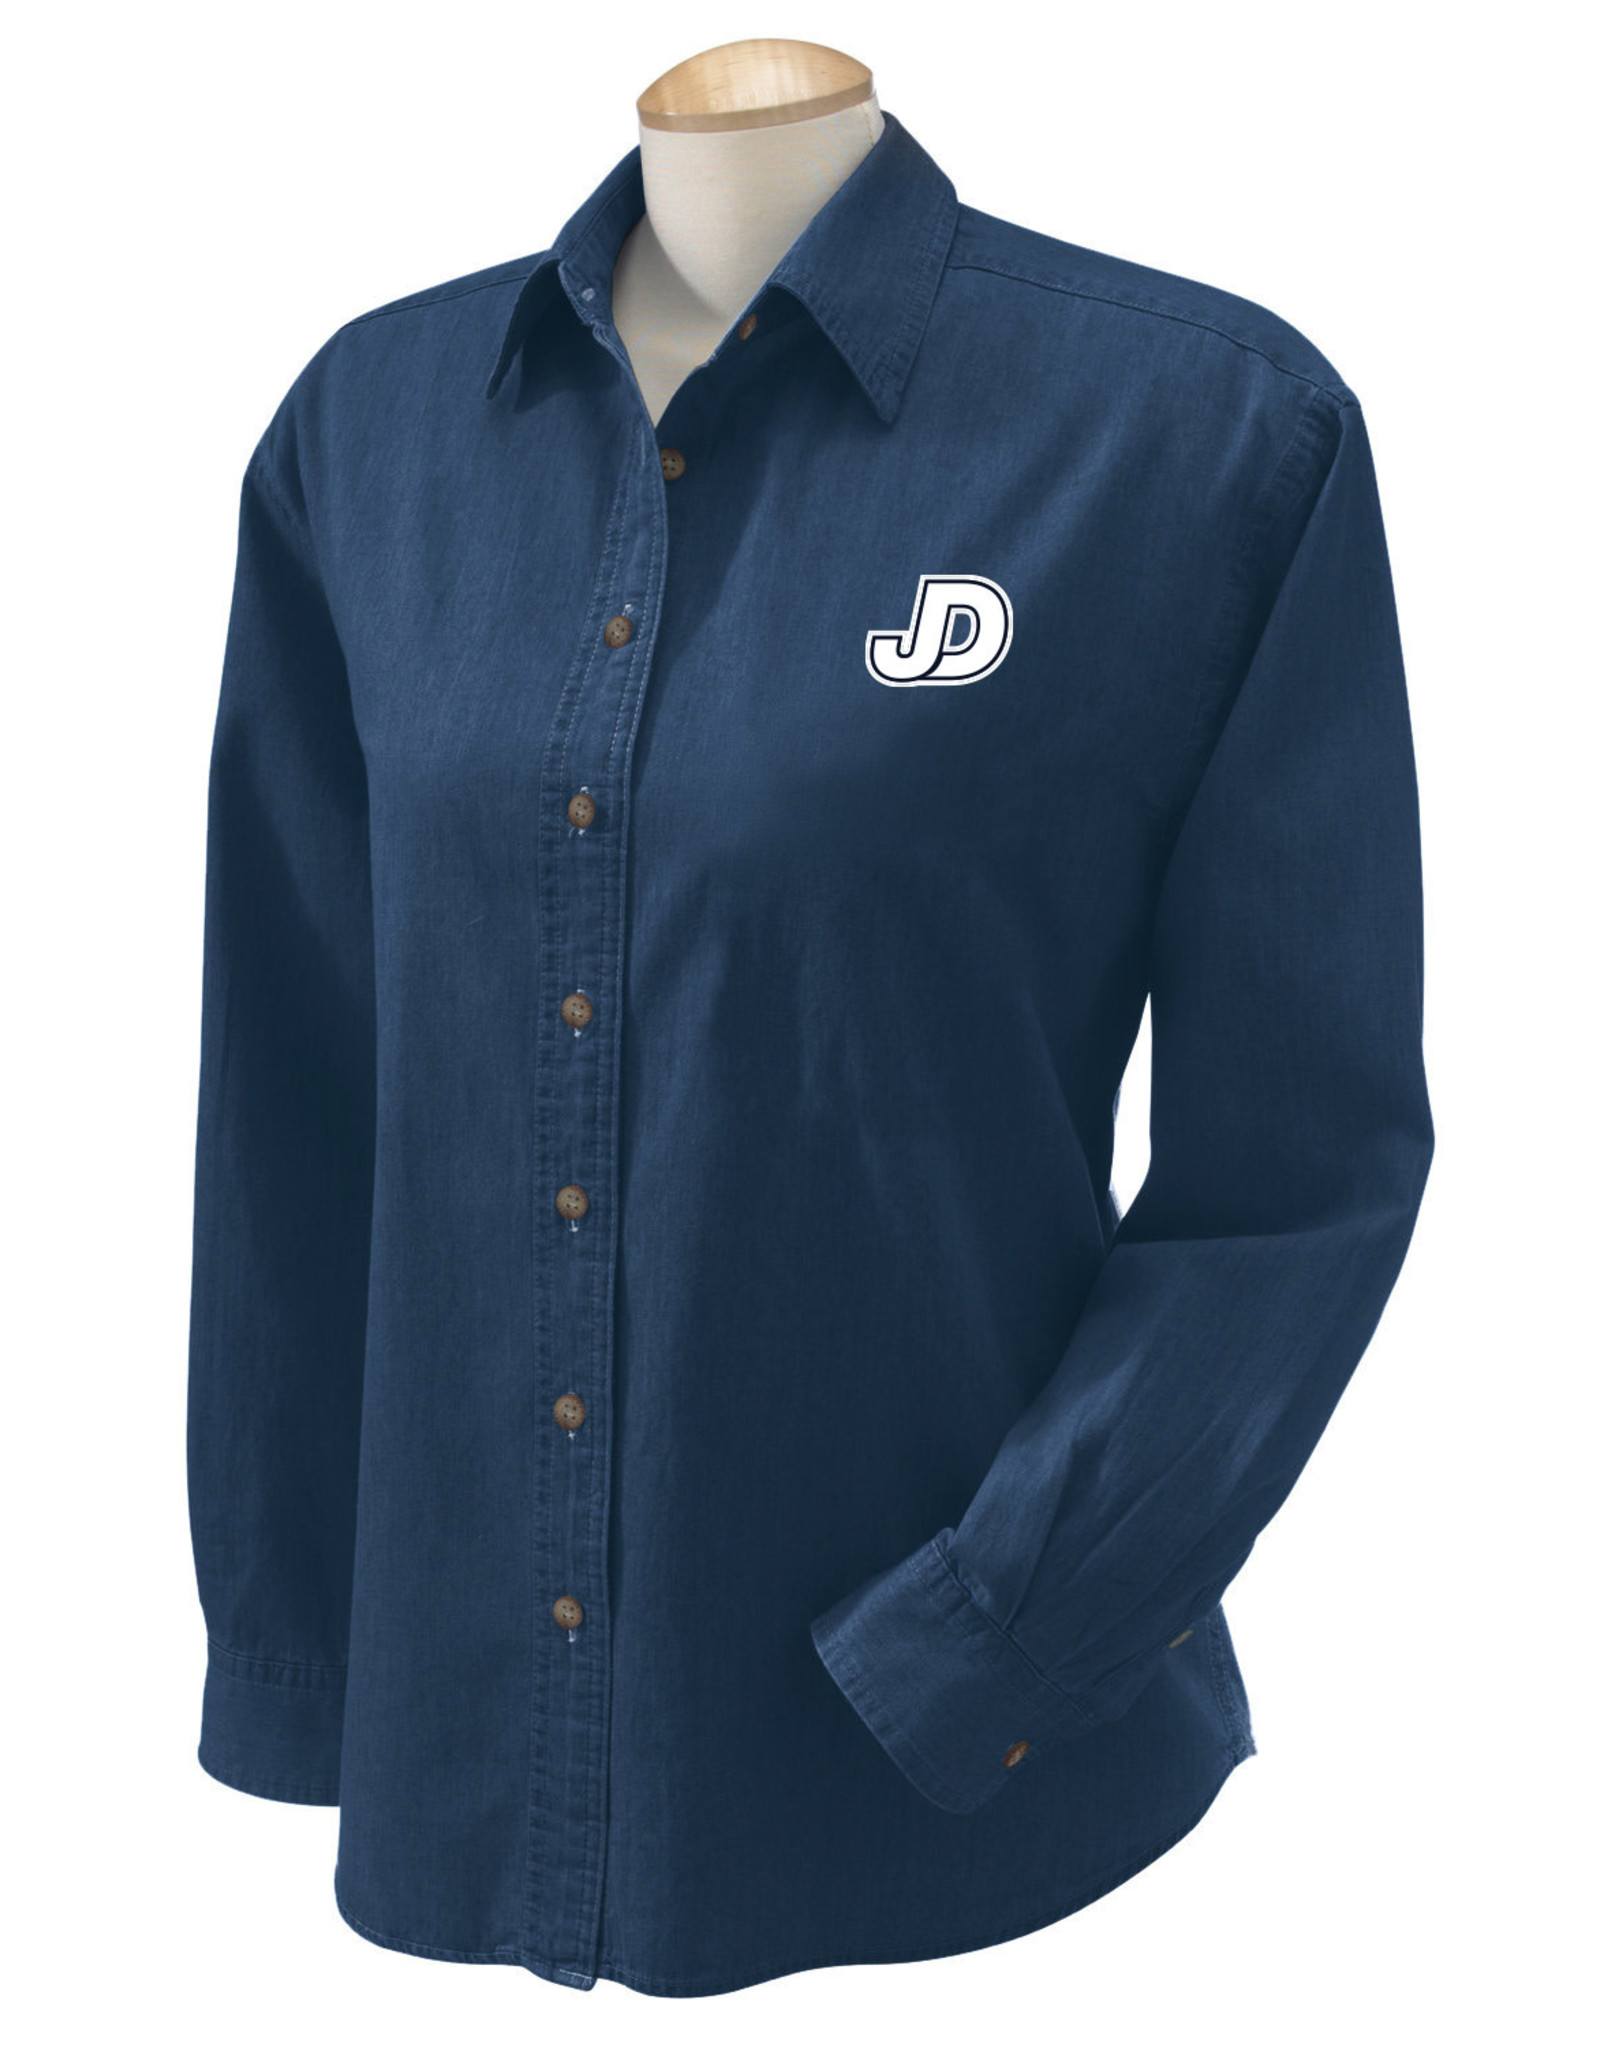 NON-UNIFORM Shirt - JD Denim Ladies long sleeve